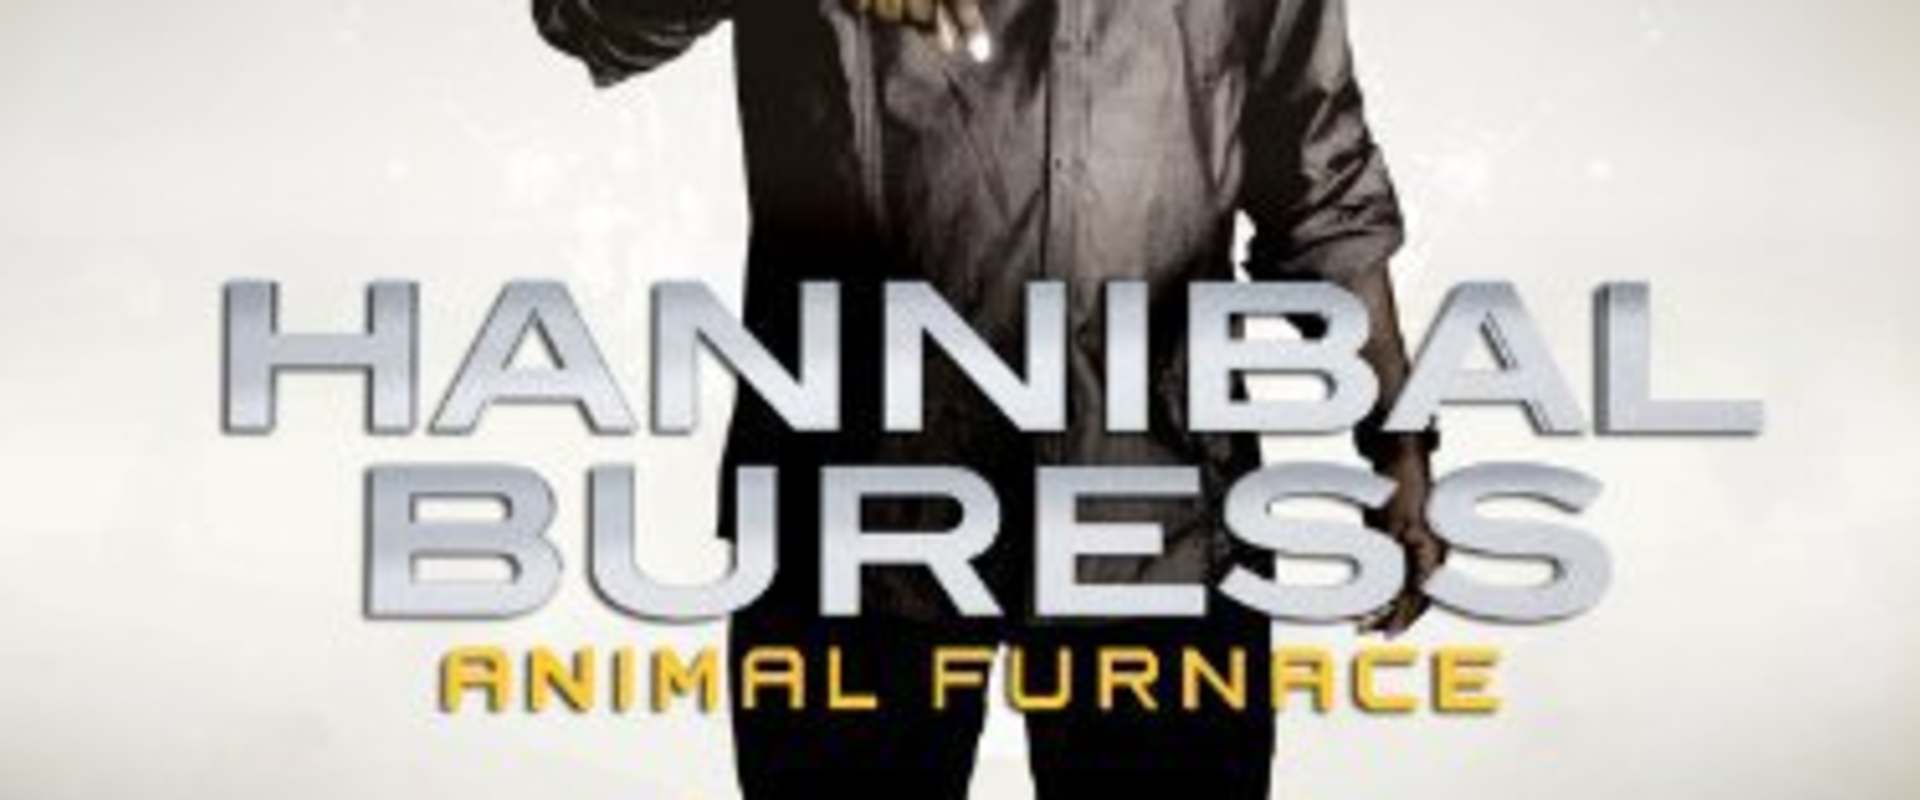 Hannibal Buress: Animal Furnace background 1